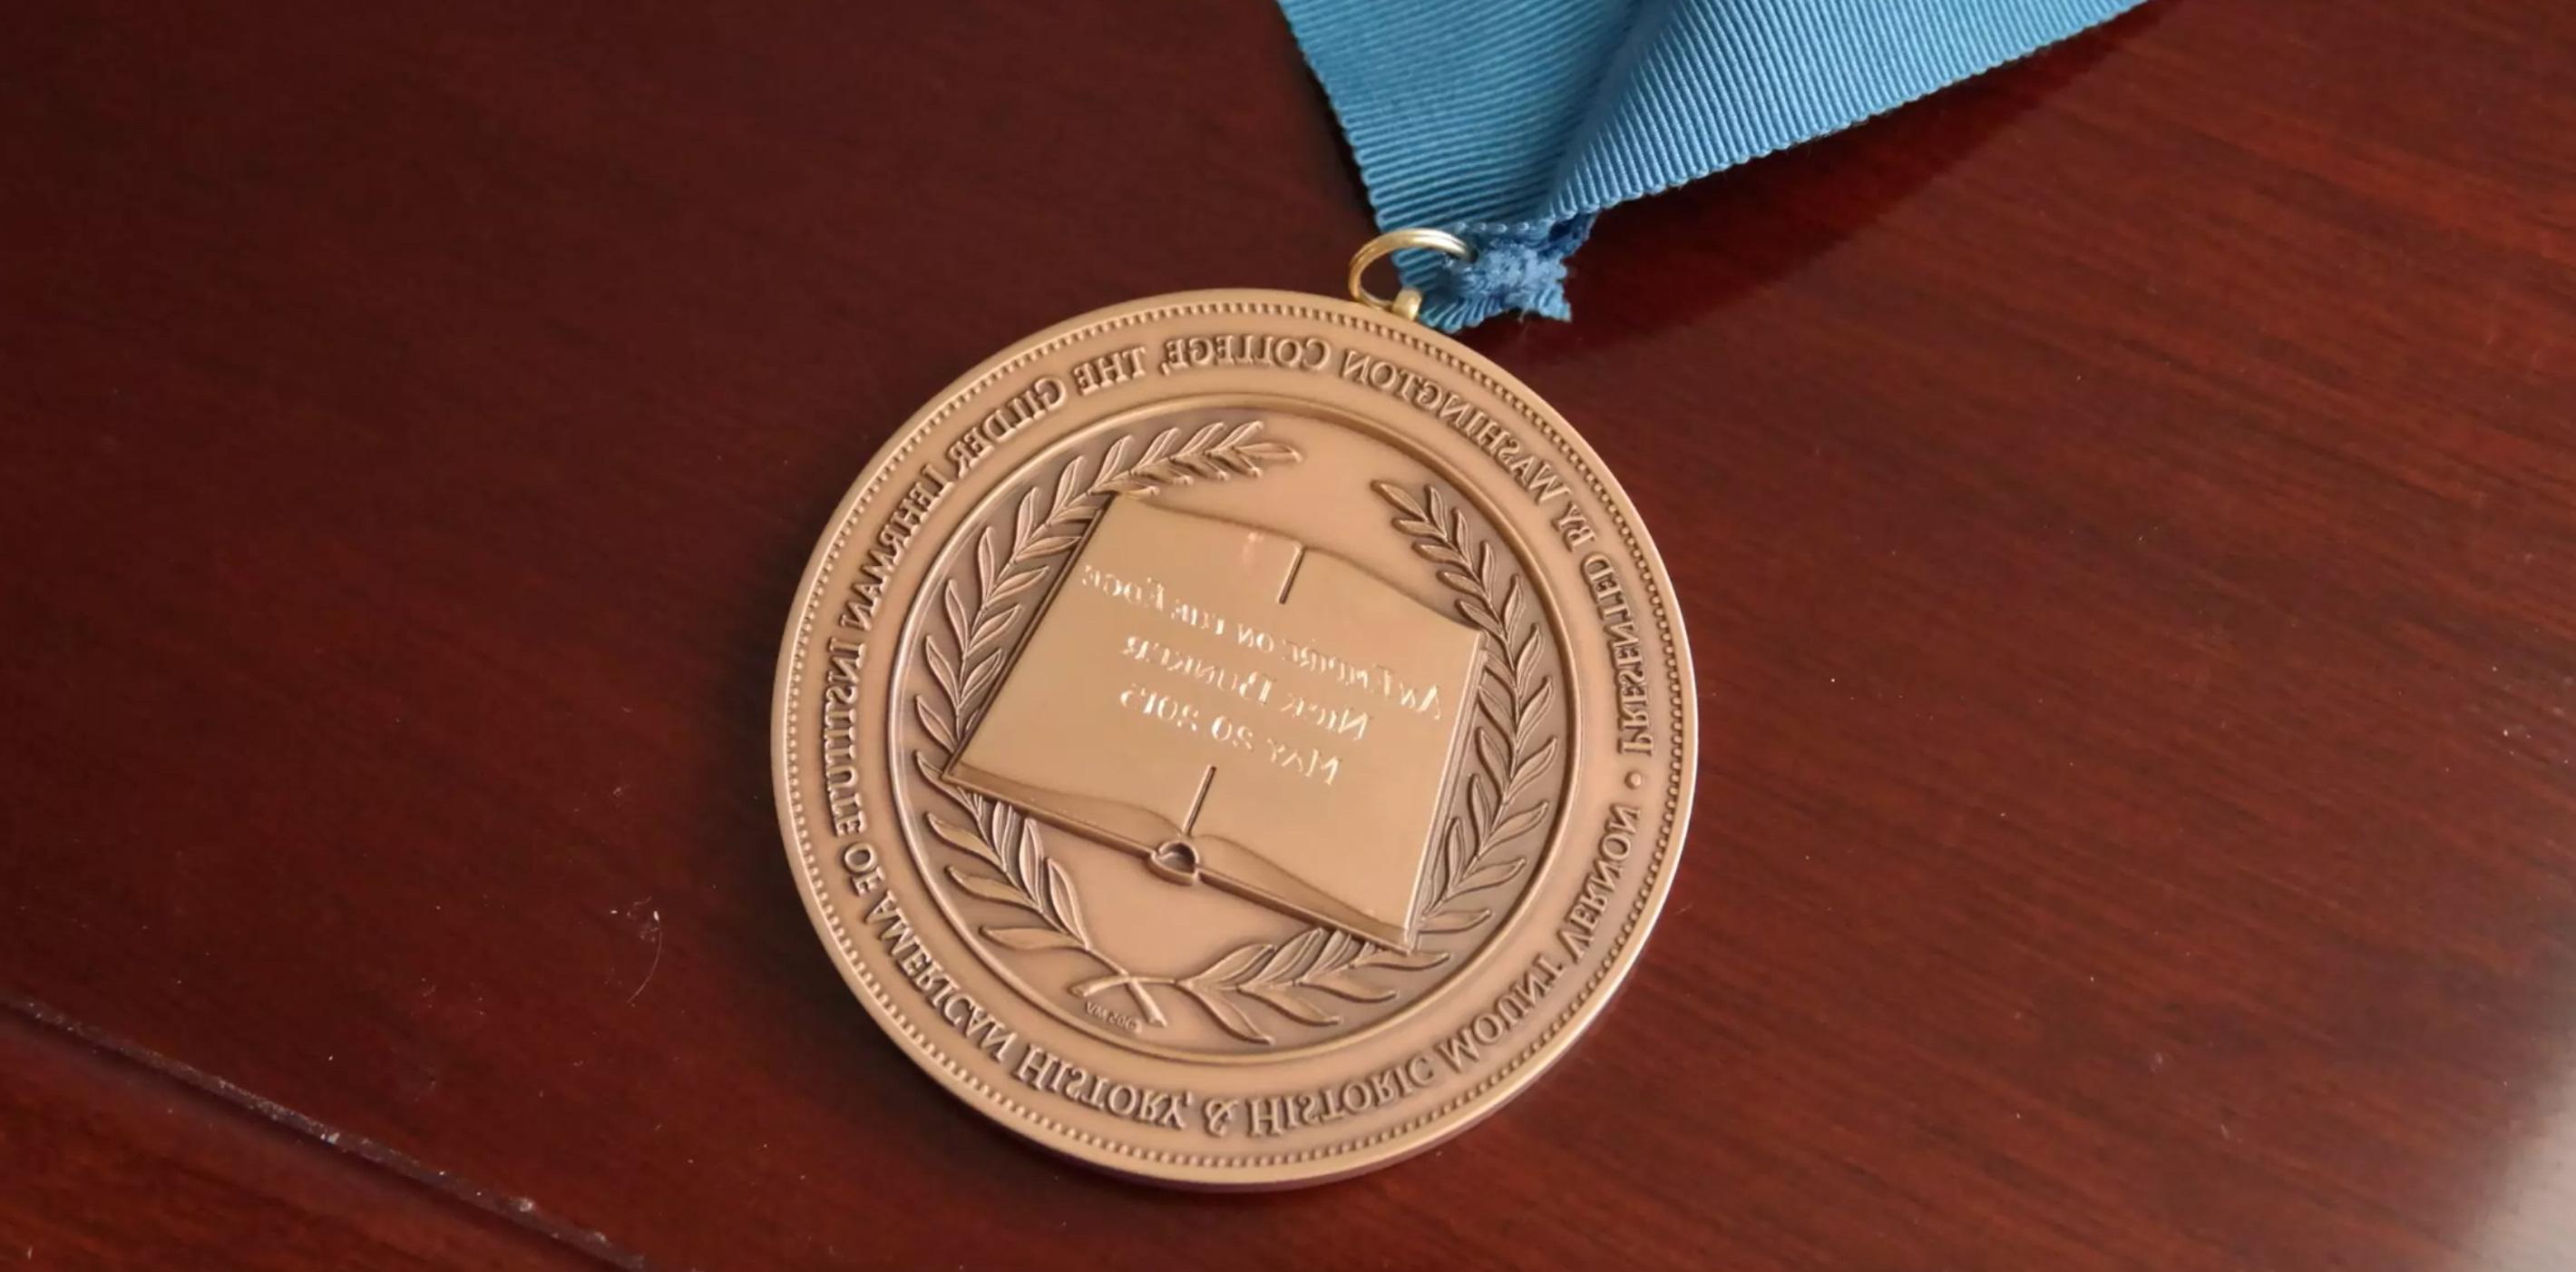 the Washington Prize medal